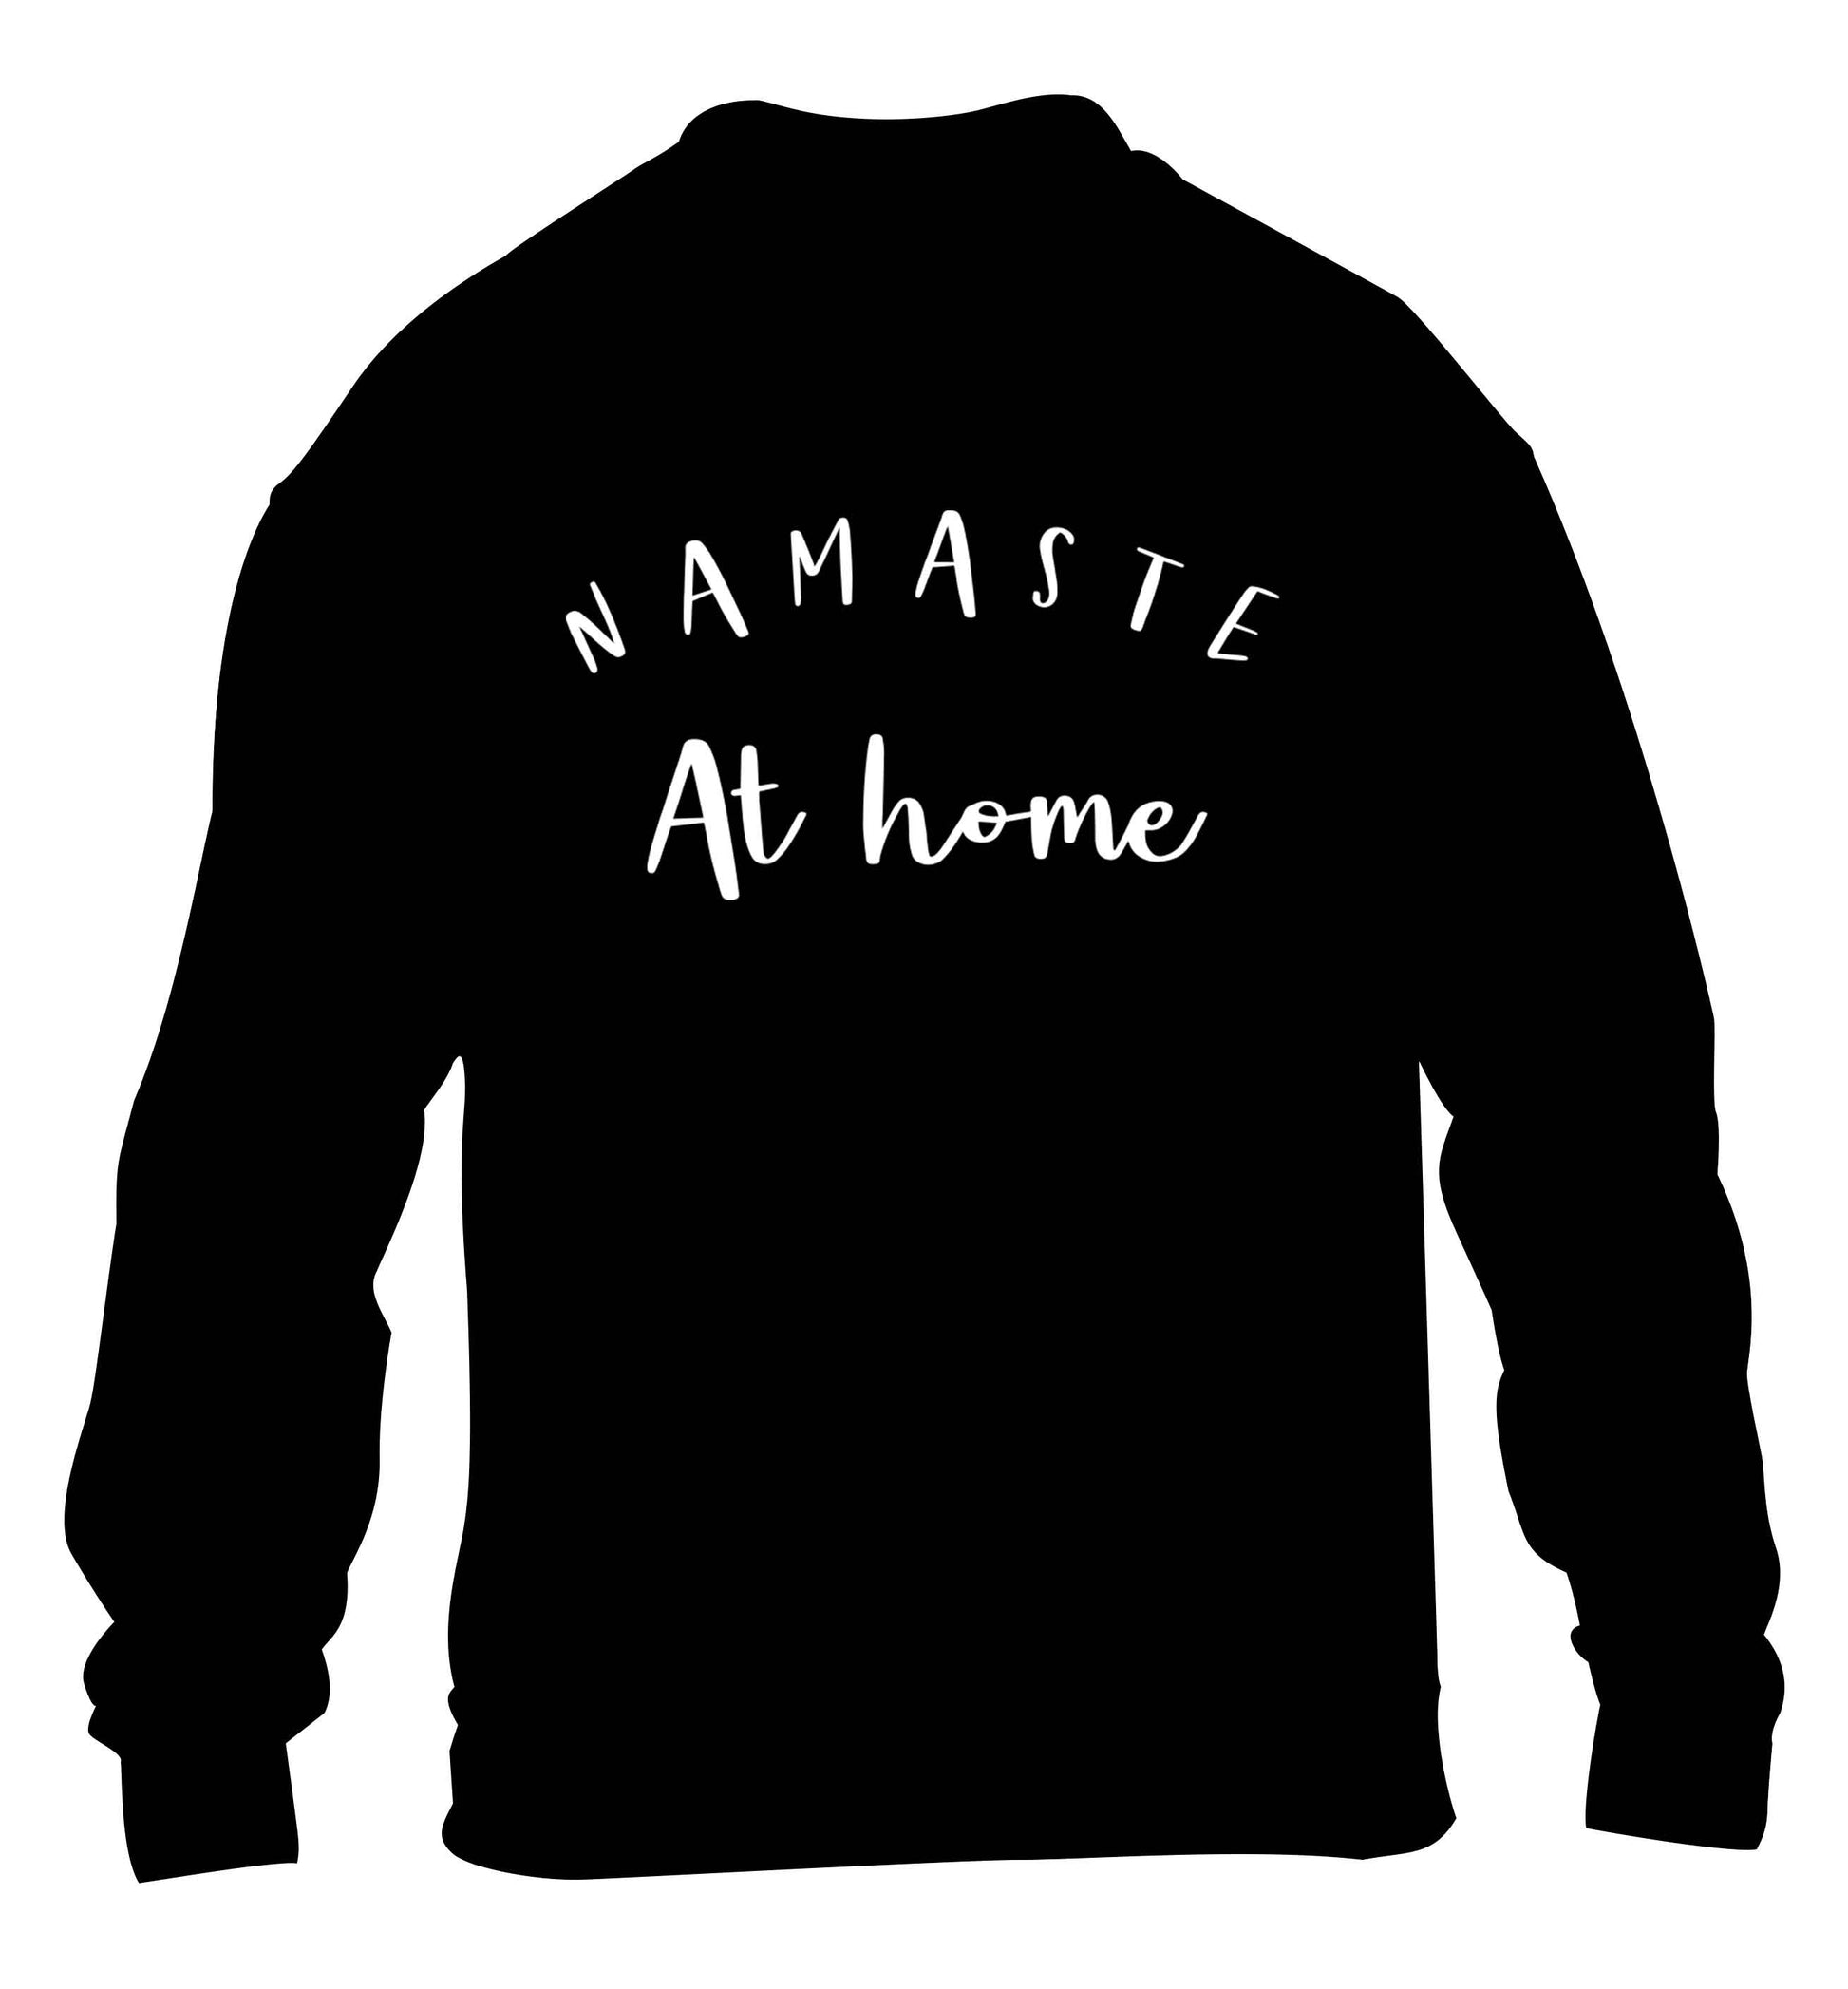 Namaste at home children's black sweater 12-13 Years